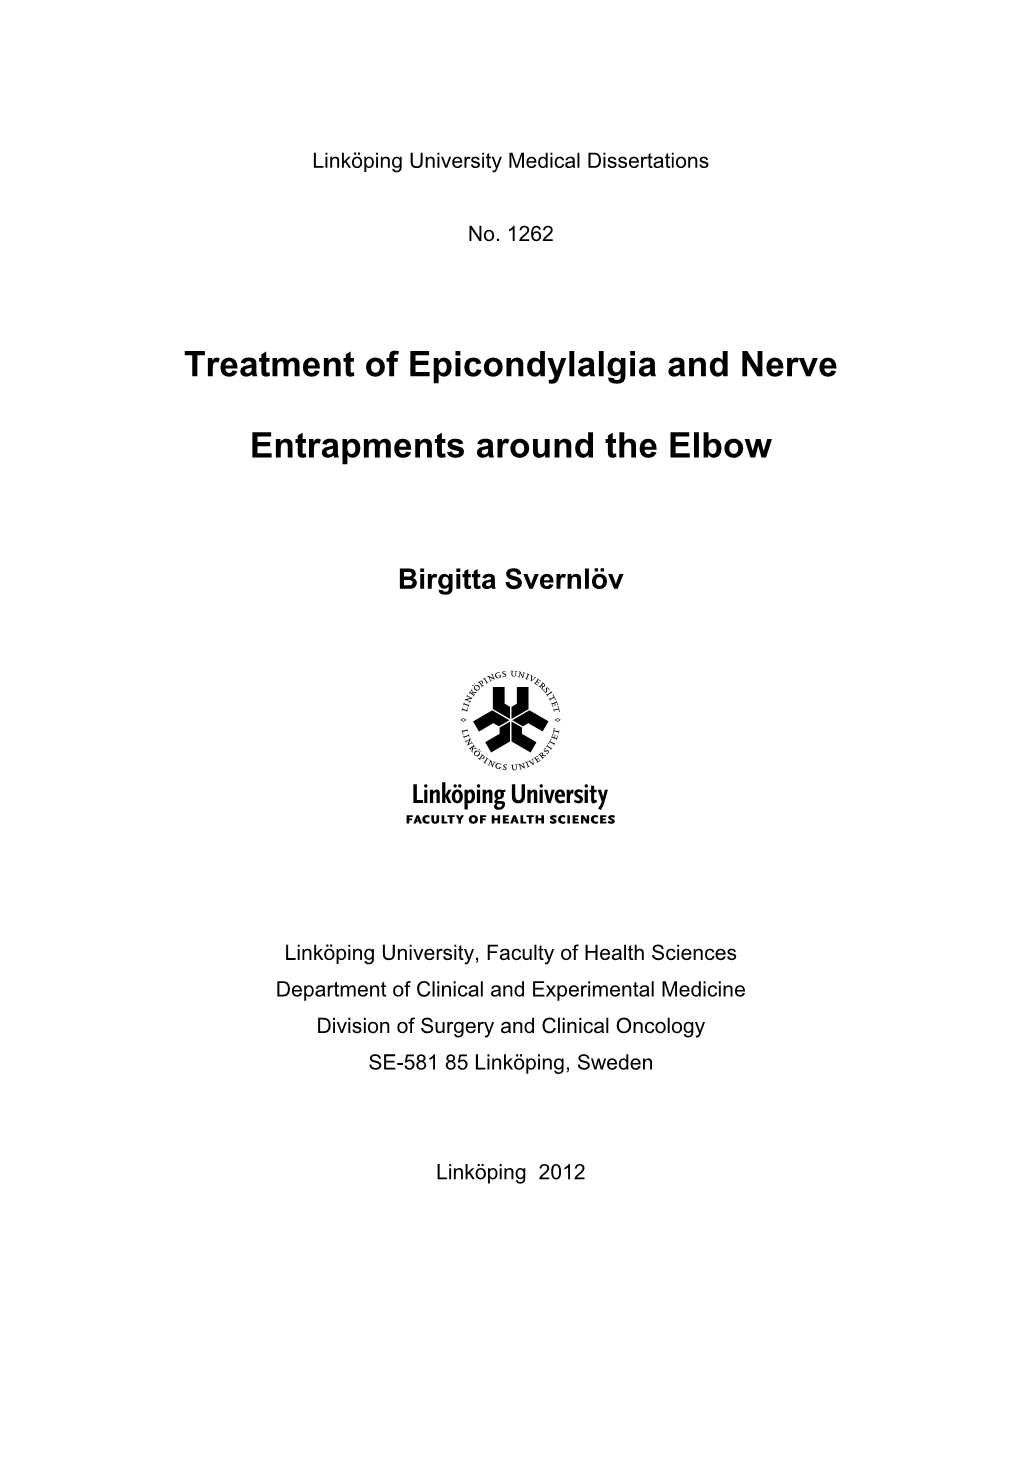 Treatment of Epicondylalgia and Nerve Entrapments Around the Elbow